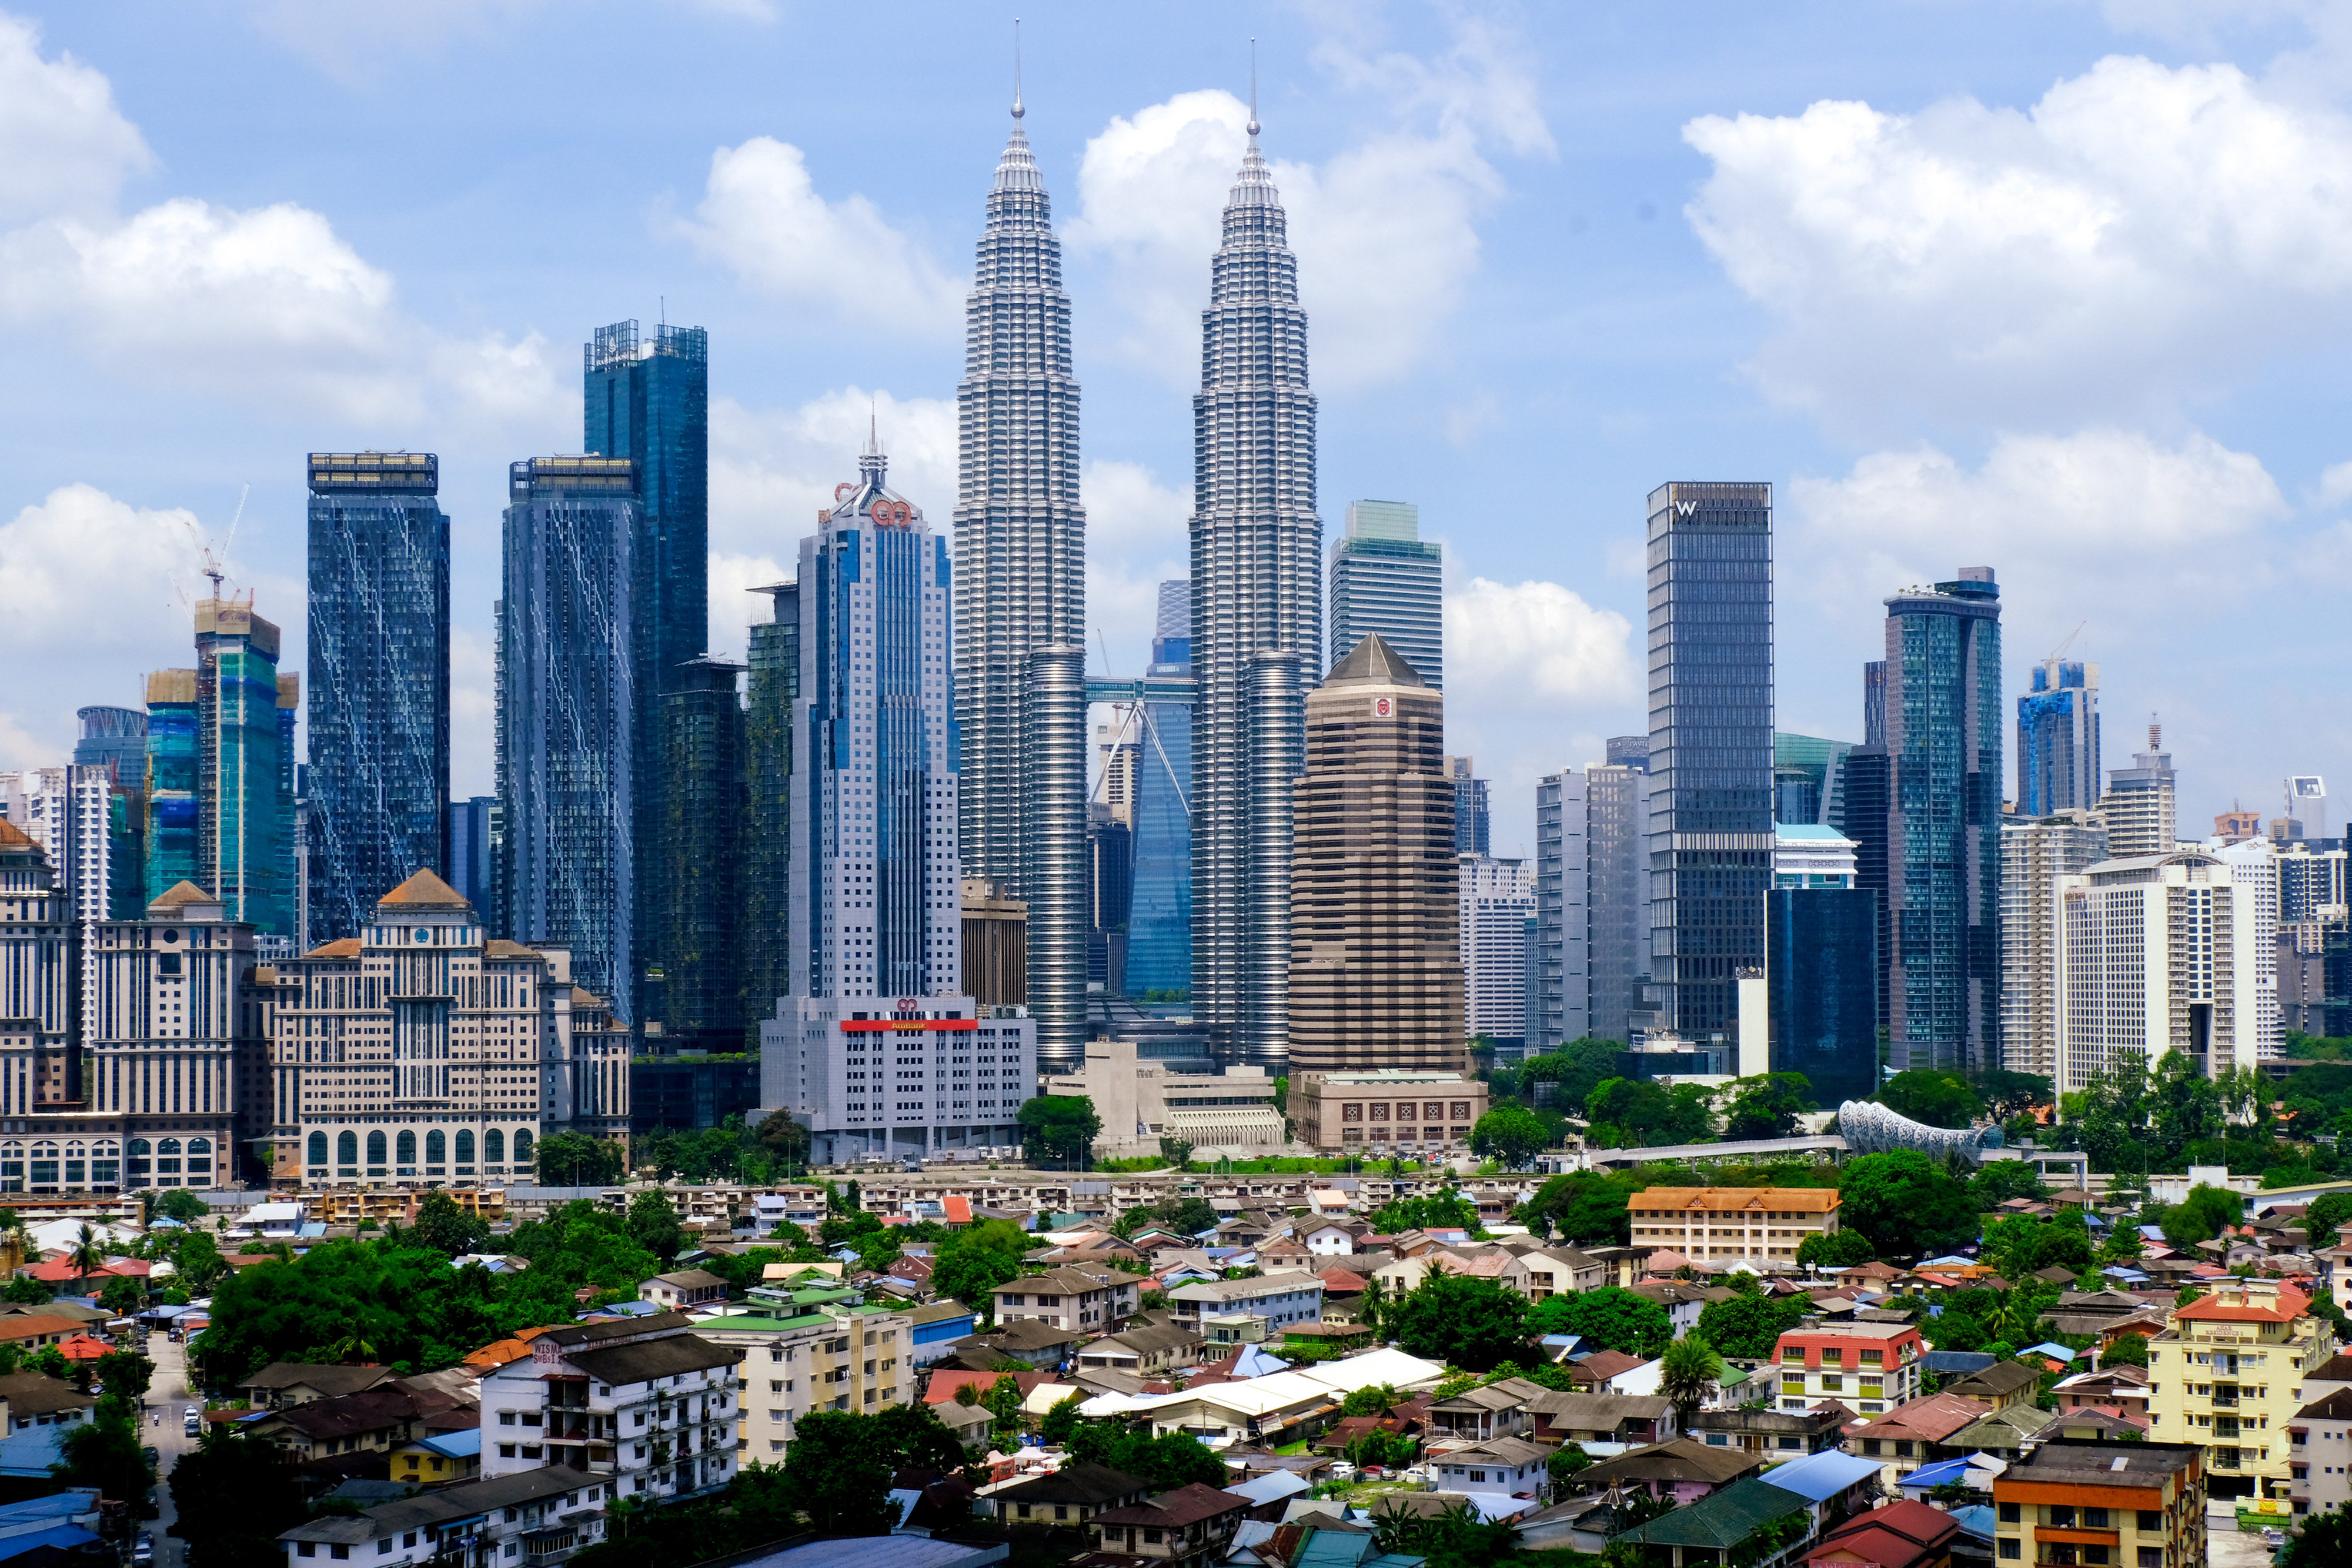 The skyline in Kuala Lumpur. Photo: Bloomberg